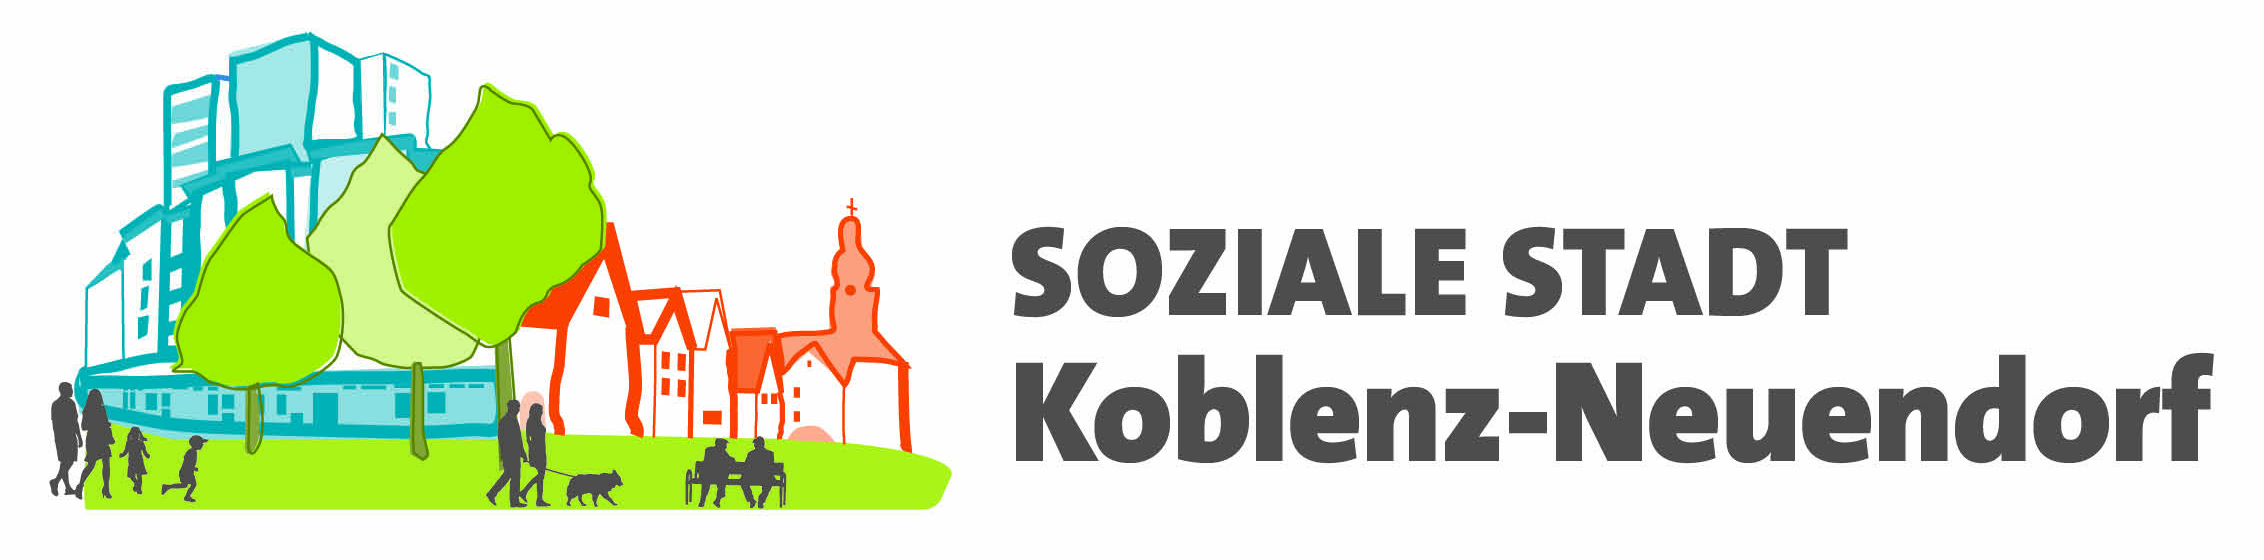 Koblenz_Neuendorf_Logo_quer